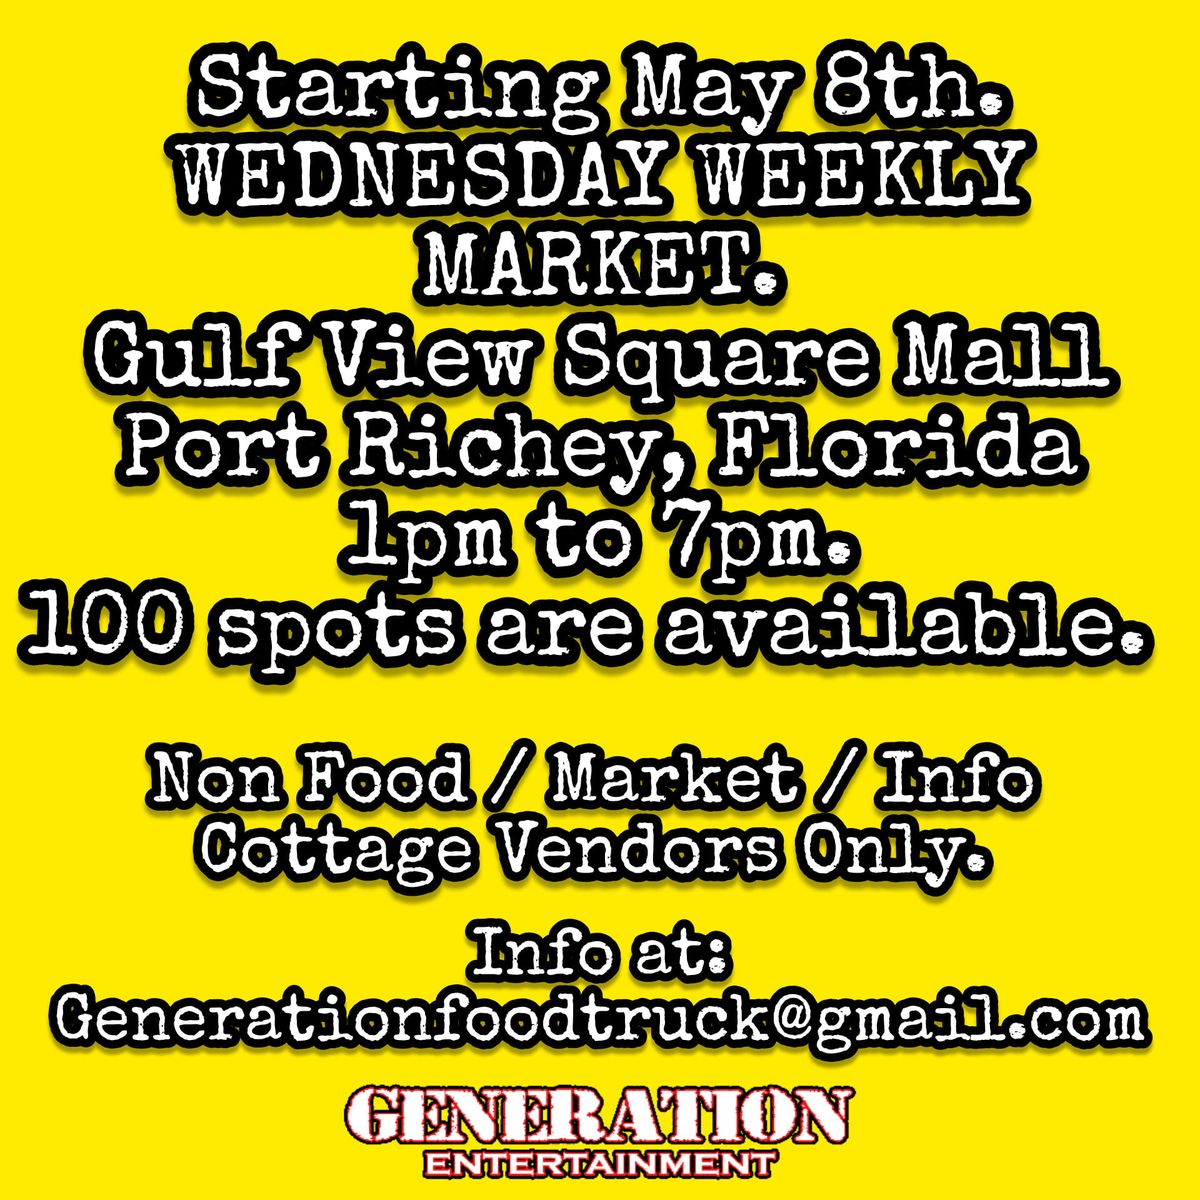 Wednesday Weekly Market - Port Richey, Florida